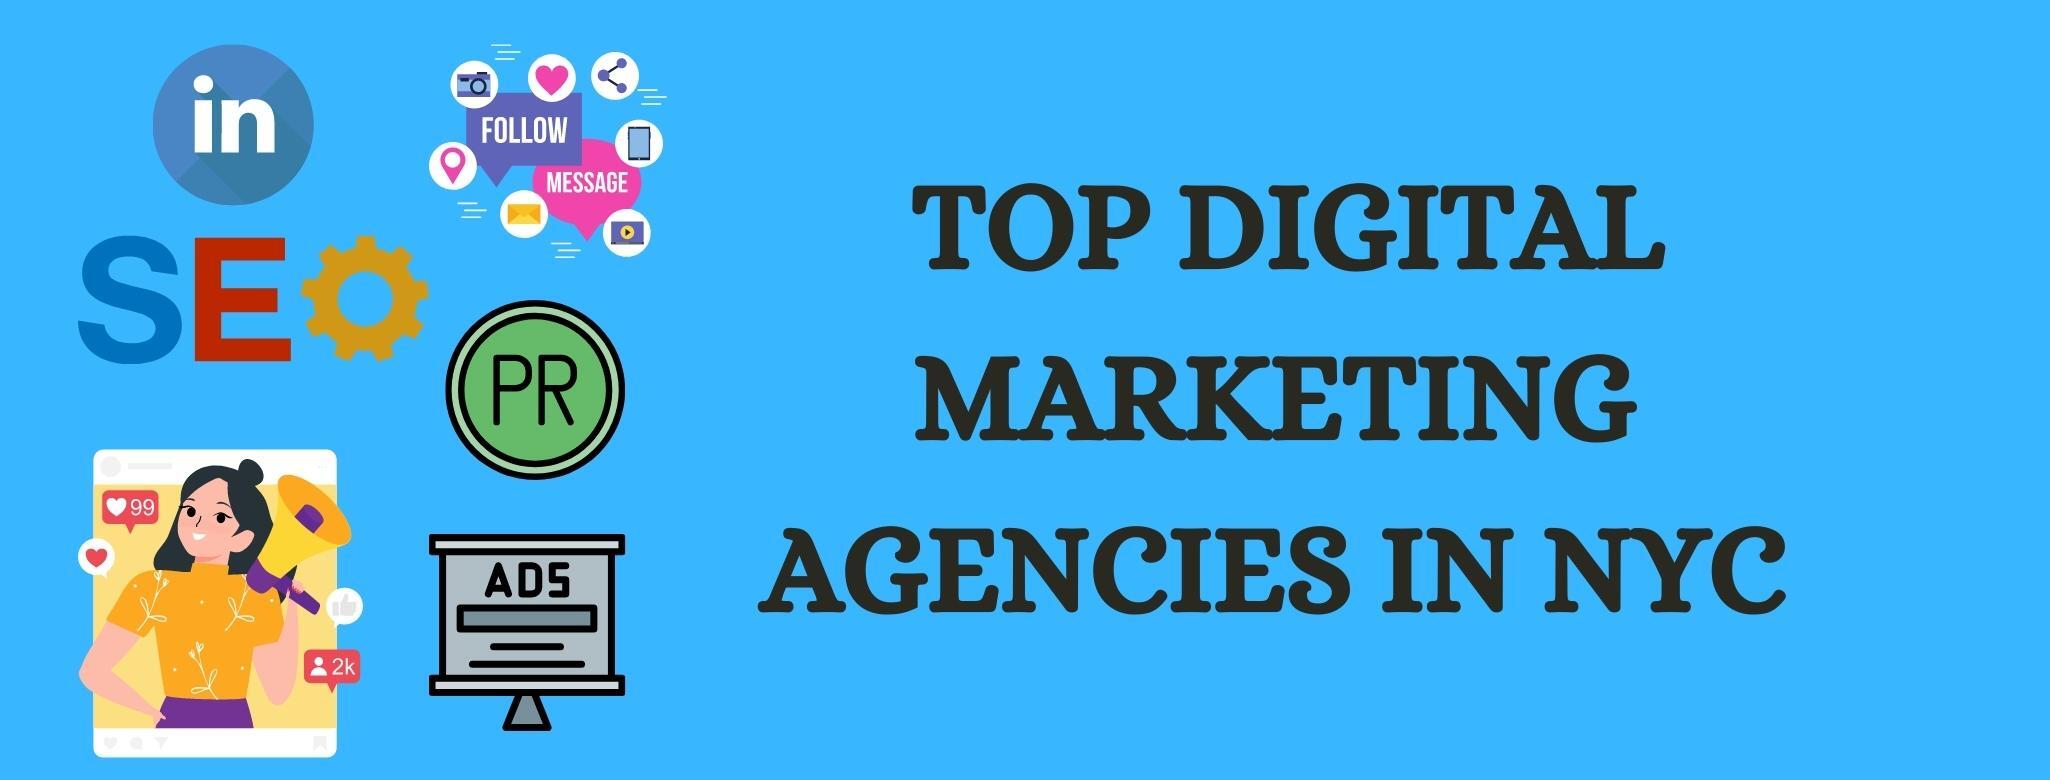 Top Digital Marketing Agencies in NYC